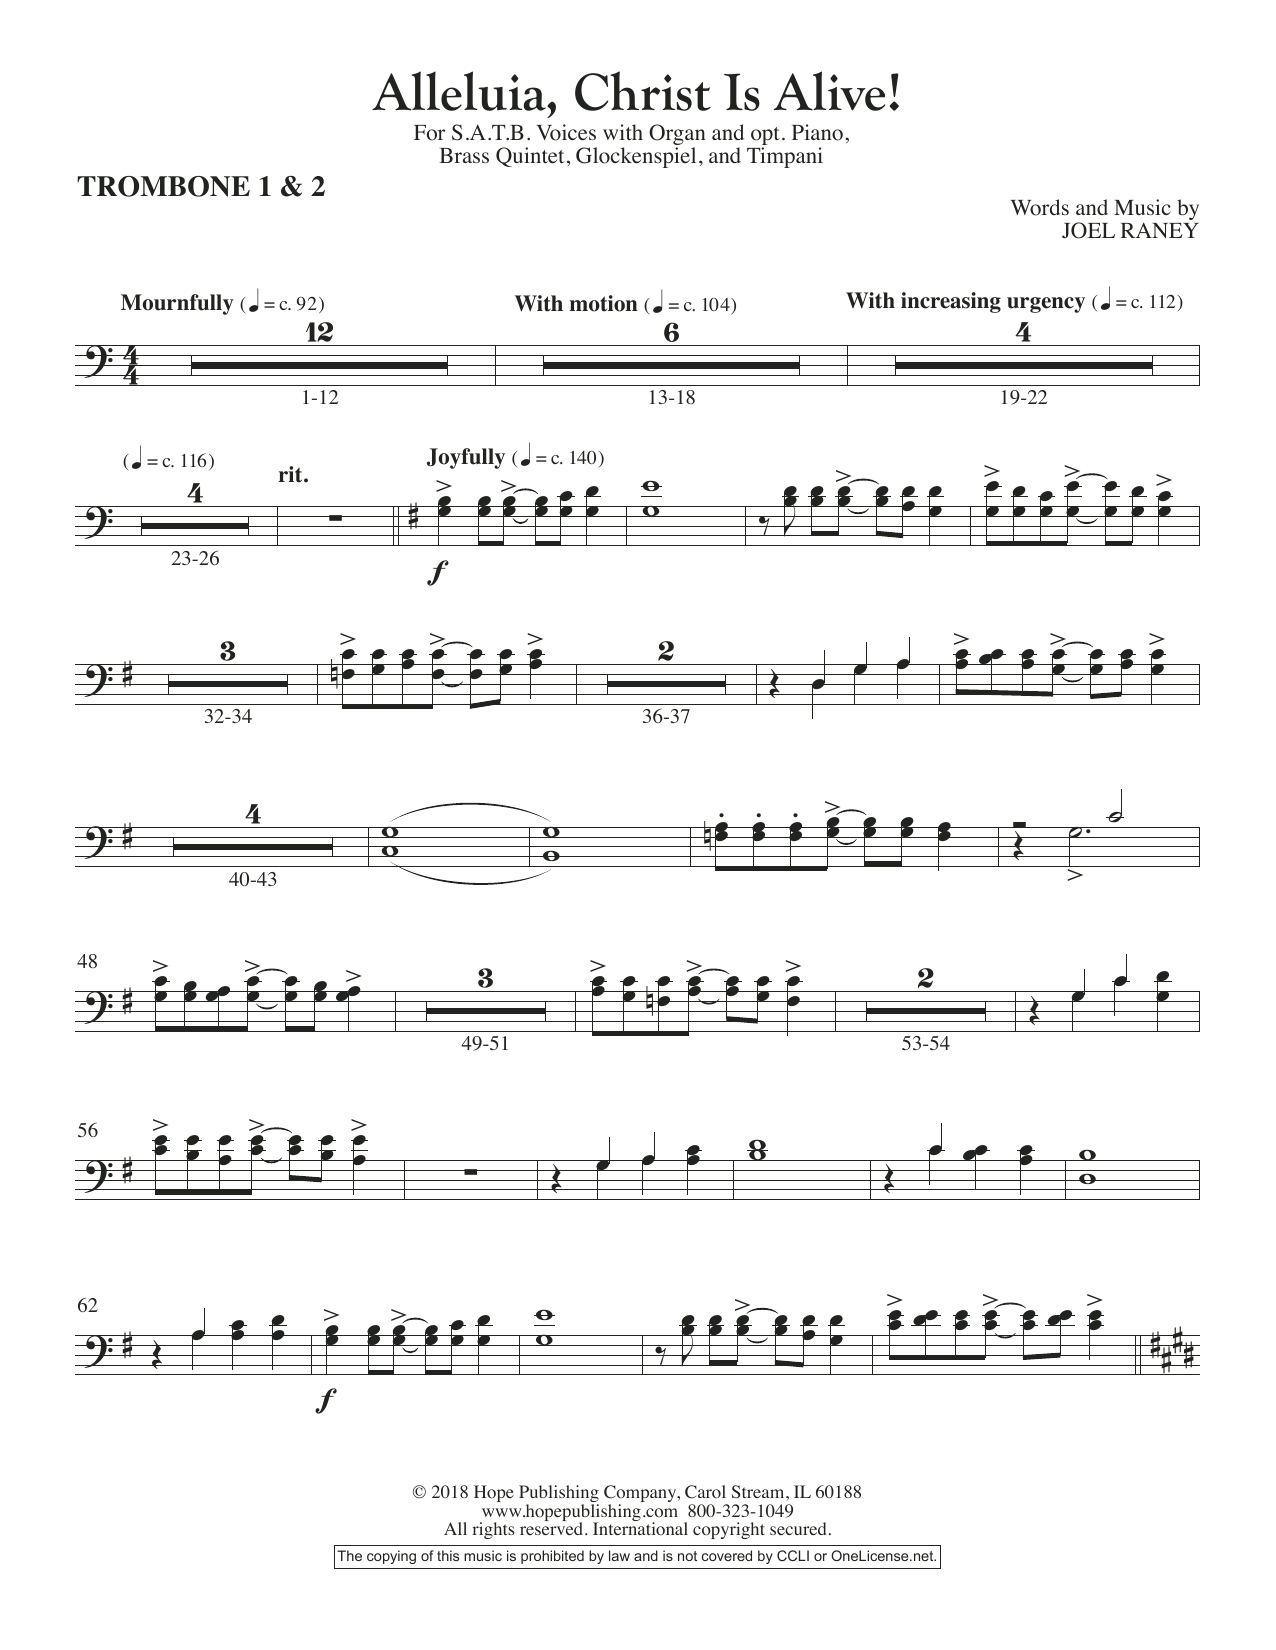 Download Joel Raney Alleluia, Christ Is Alive! - Trombone 1 & 2 Sheet Music and learn how to play Choir Instrumental Pak PDF digital score in minutes